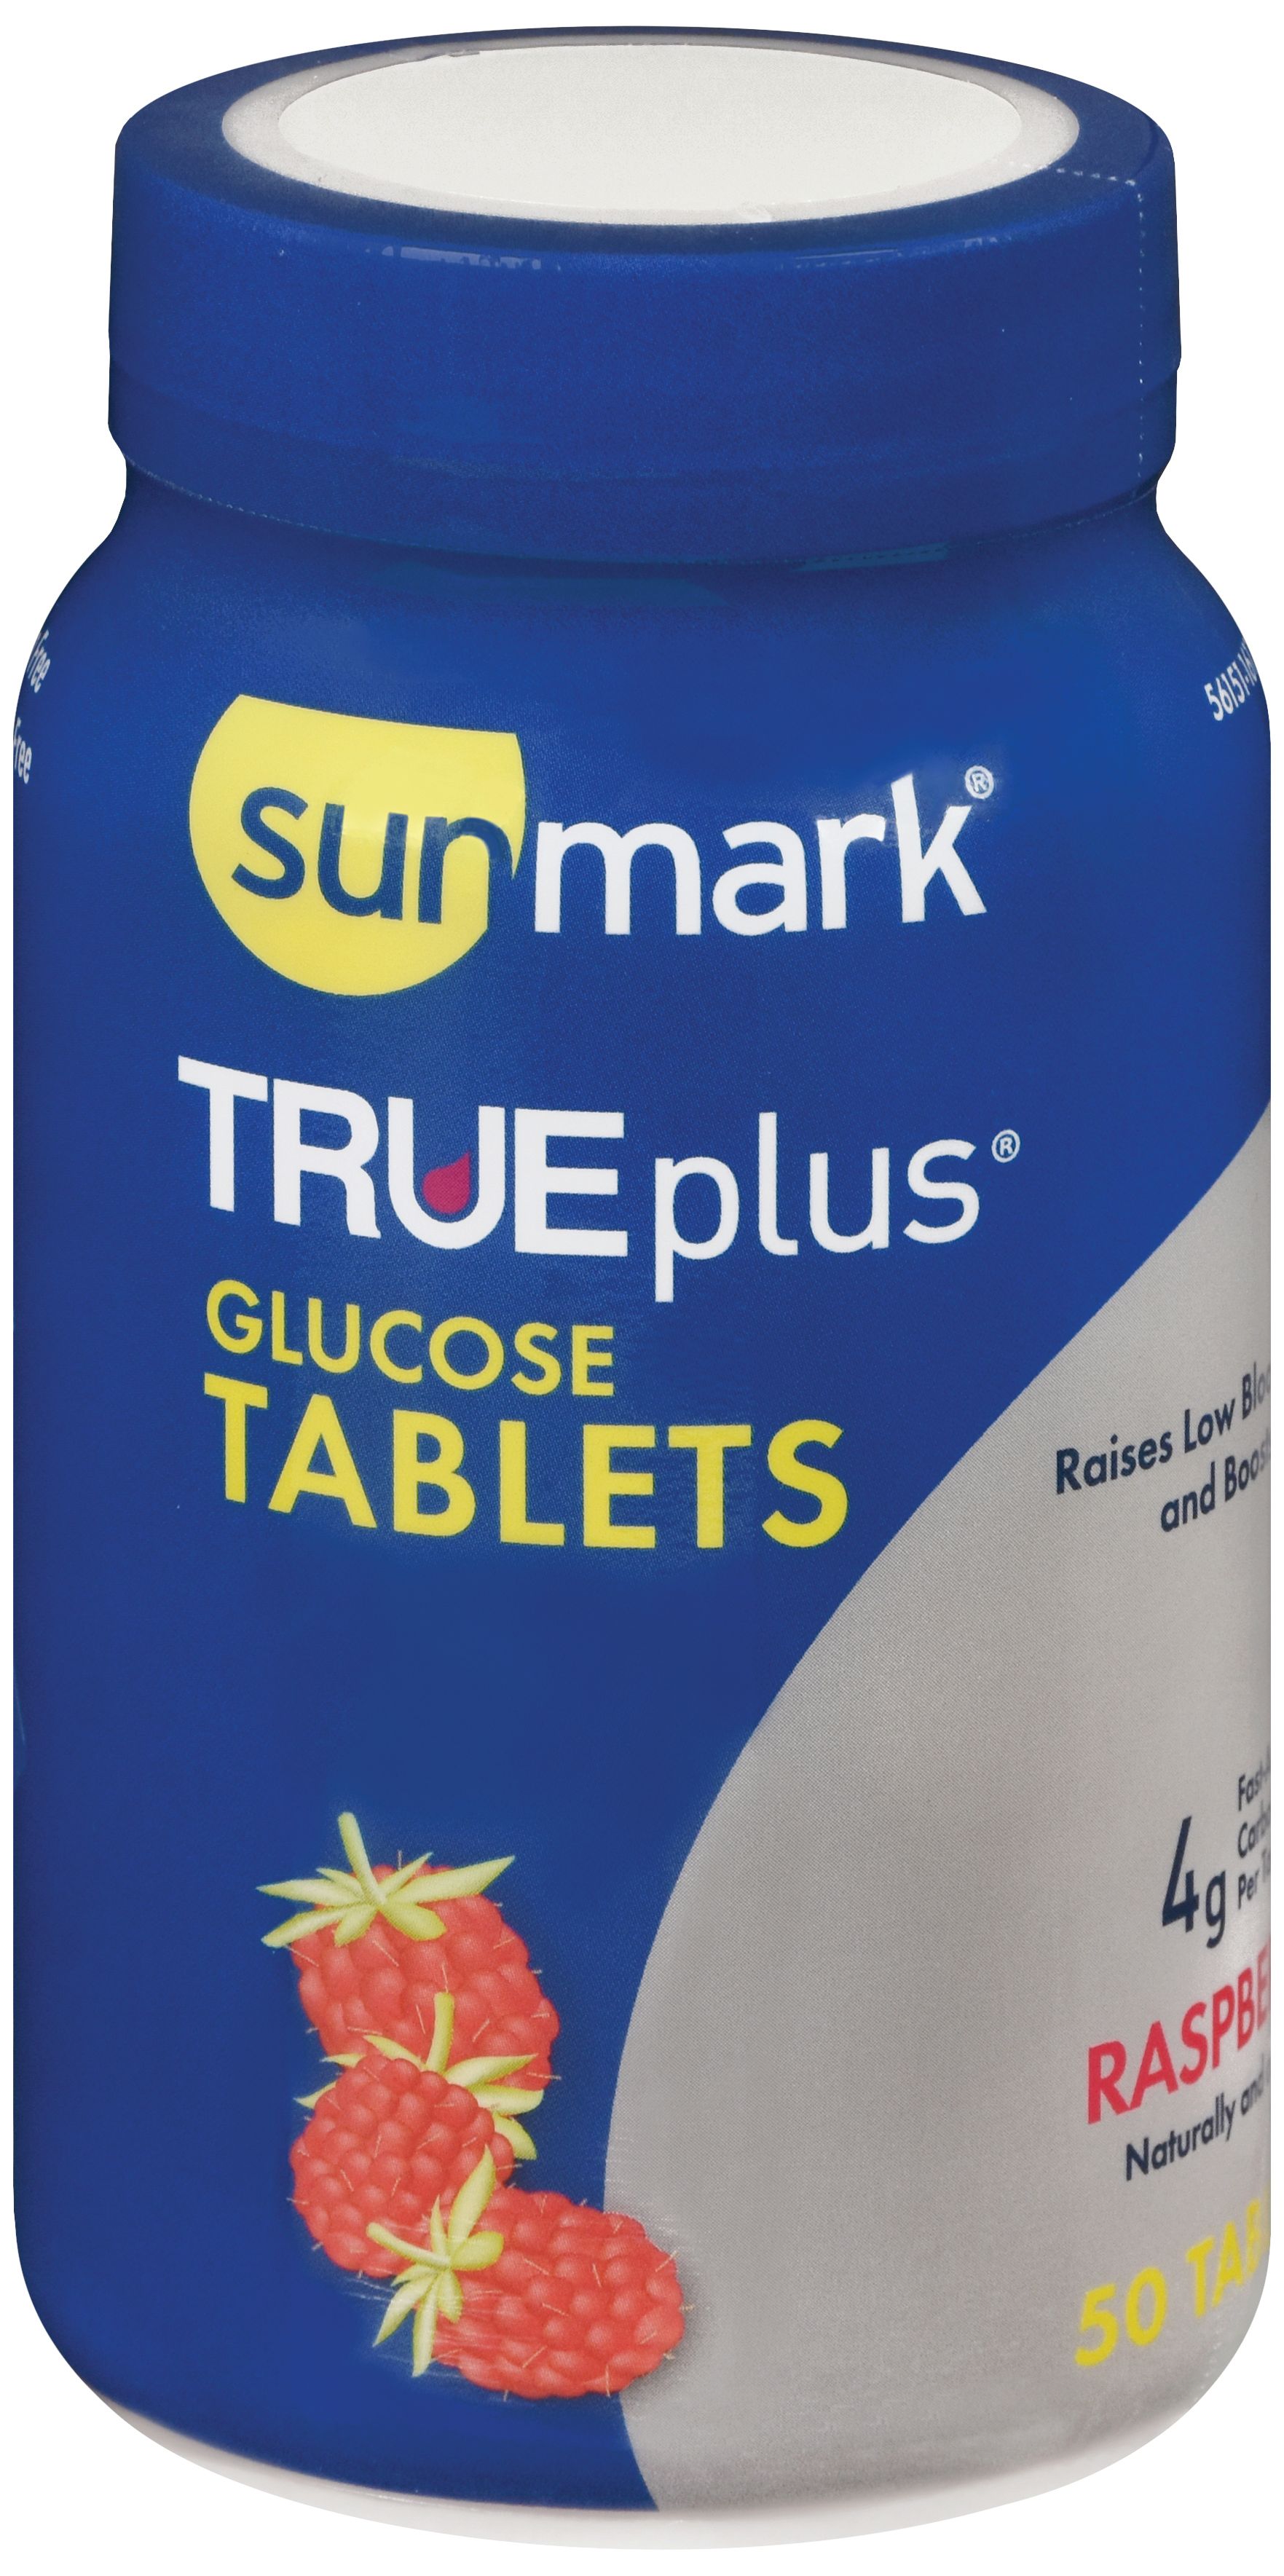 Sunmark TRUEplus Glucose Tablets, Raspberry, 10 Tablets - 6 Pack